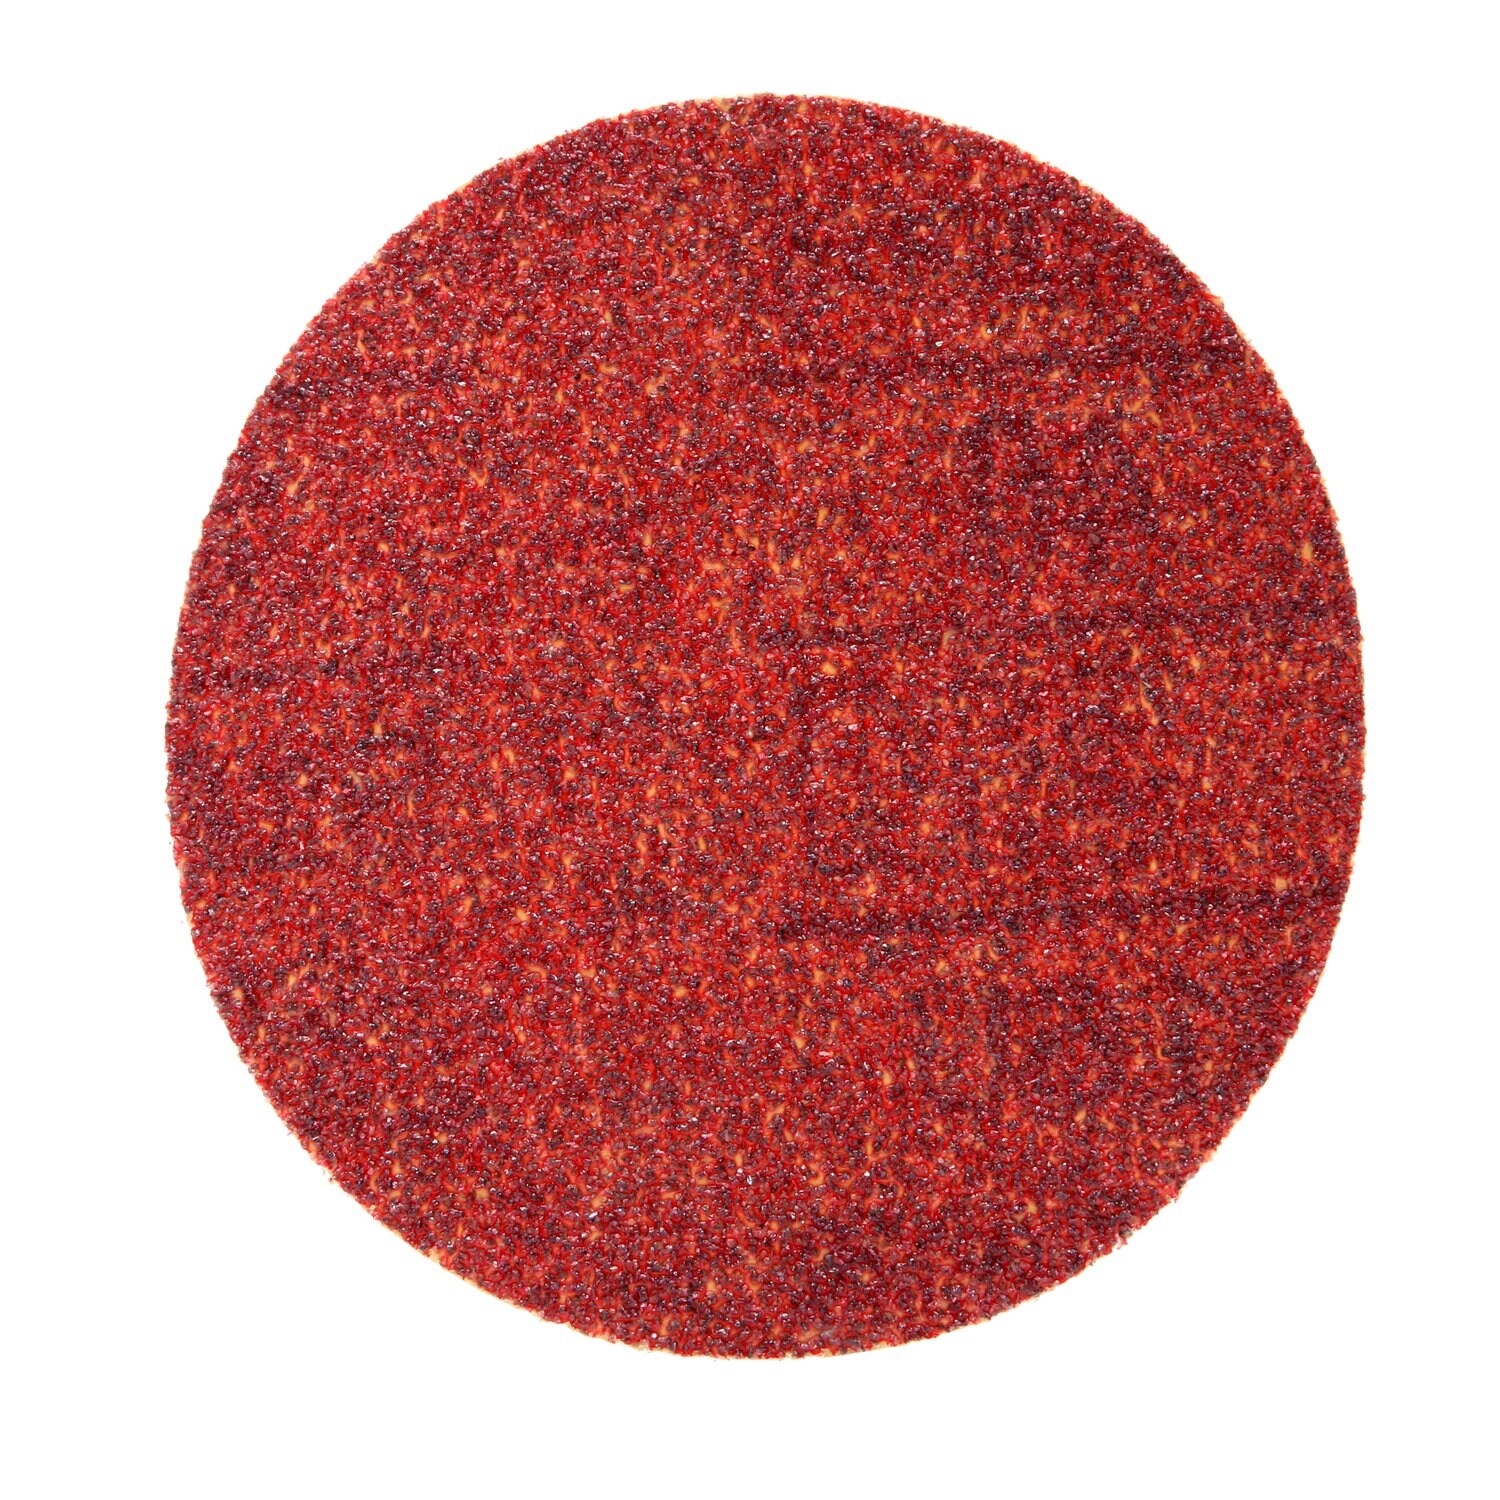 7000119849 - 3M Hookit Red Abrasive Disc, 01303, 5 in, 40, 25 discs per carton, 6
cartons per case